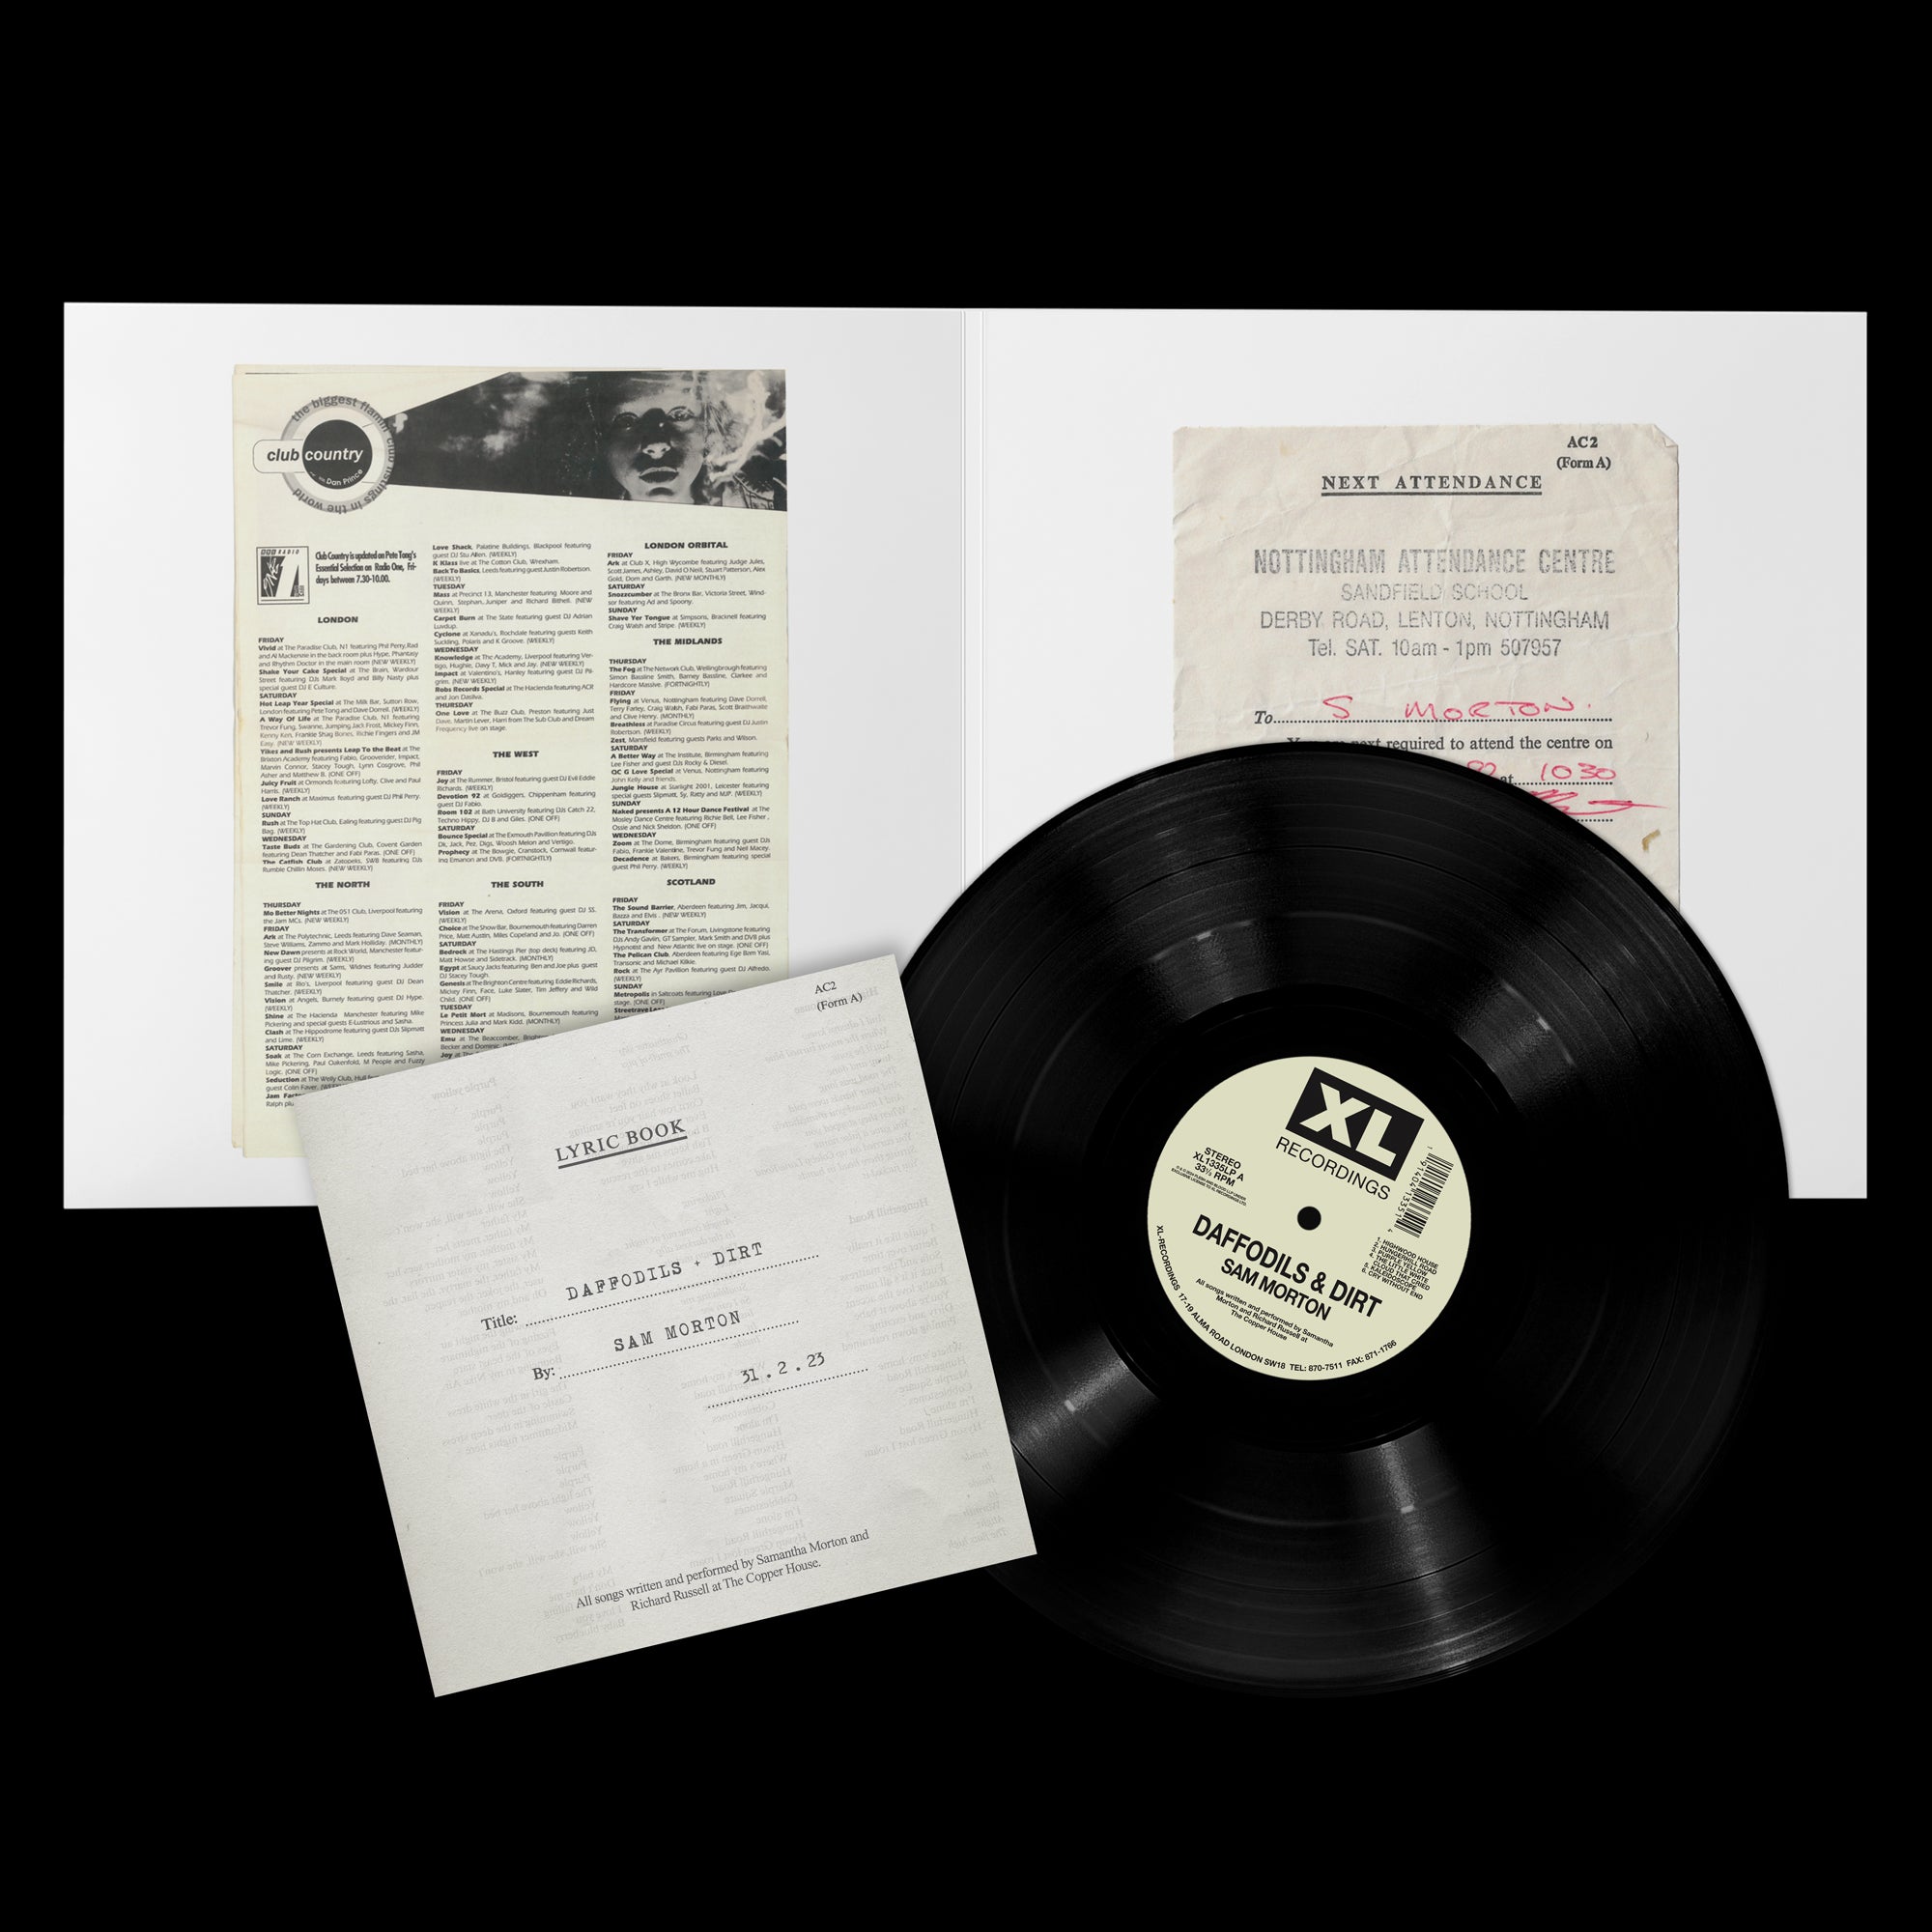 SAM MORTON - Daffodils & Dirt: Vinyl LP